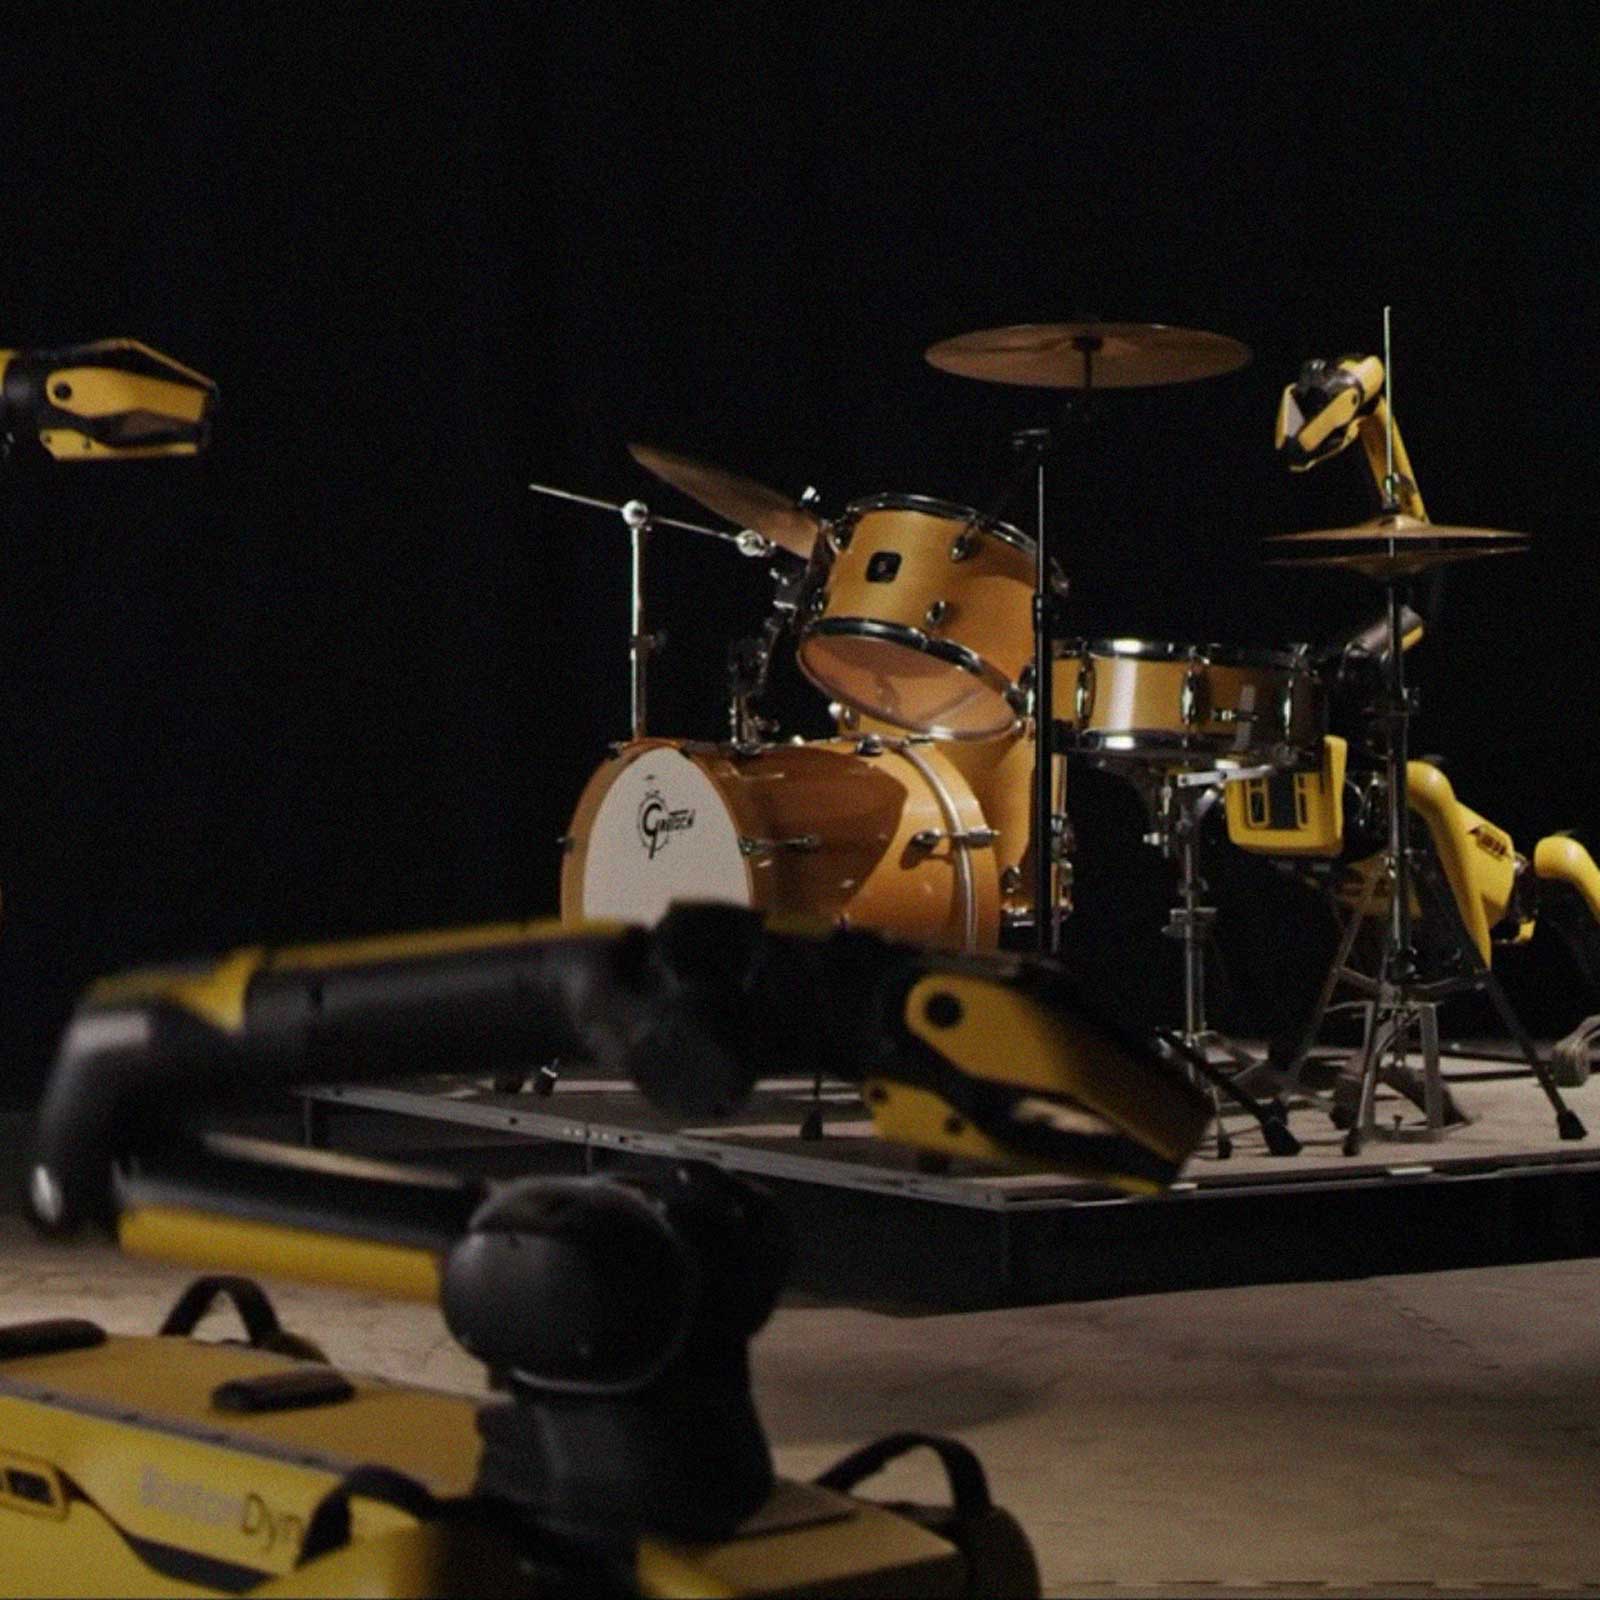 Start Me Up: робопсы Boston Dynamics повторили клип The Rolling Stones